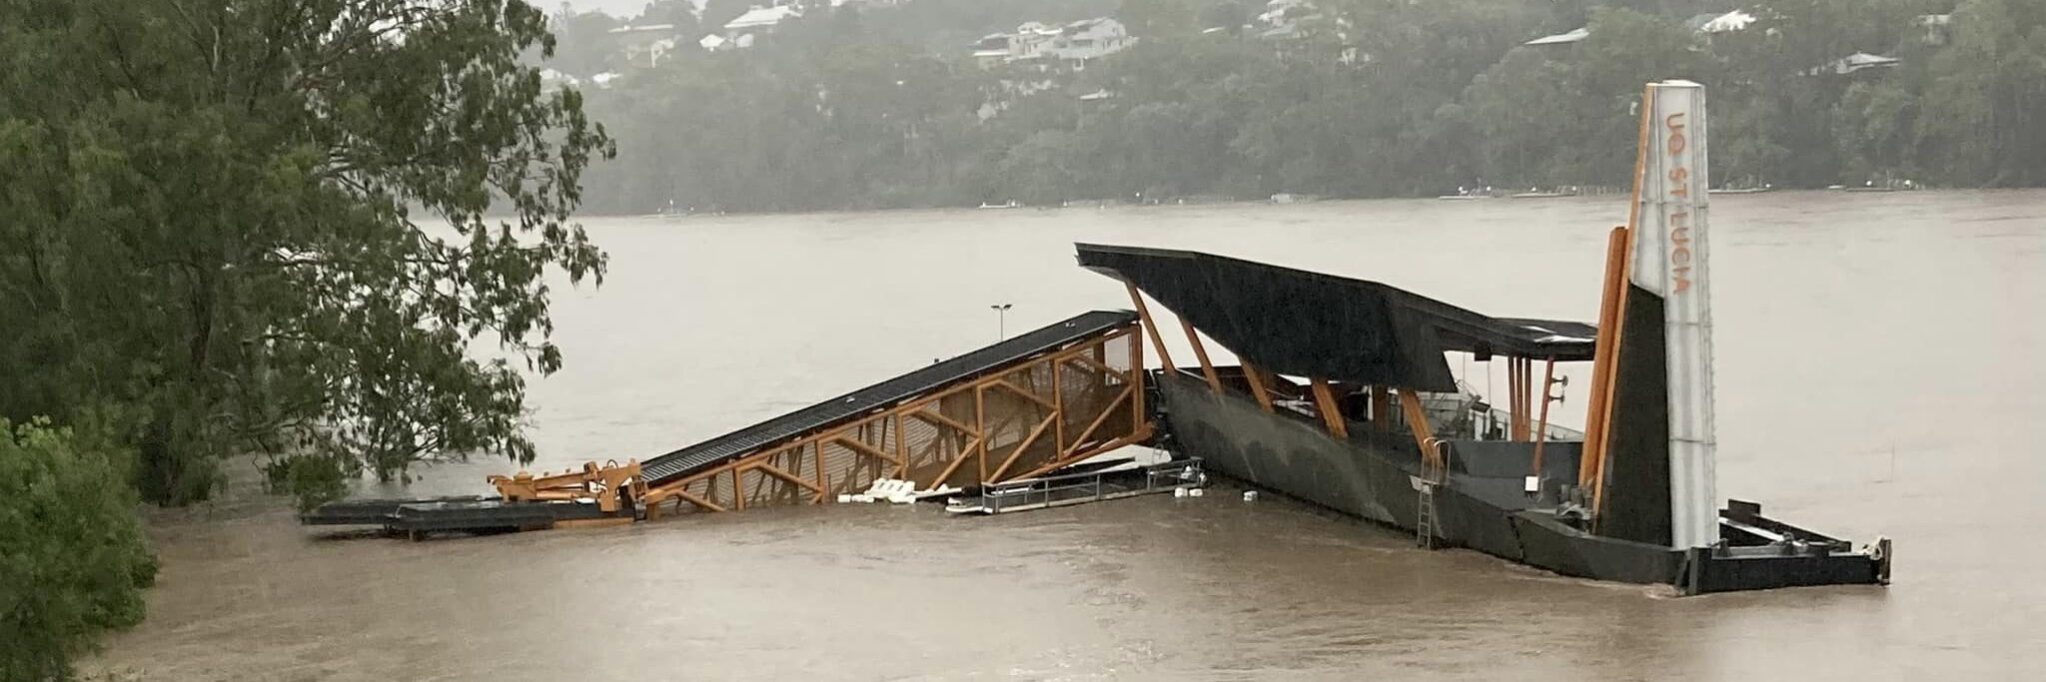 Queensland Flood Crisis Death Toll Now At 7 Newscop